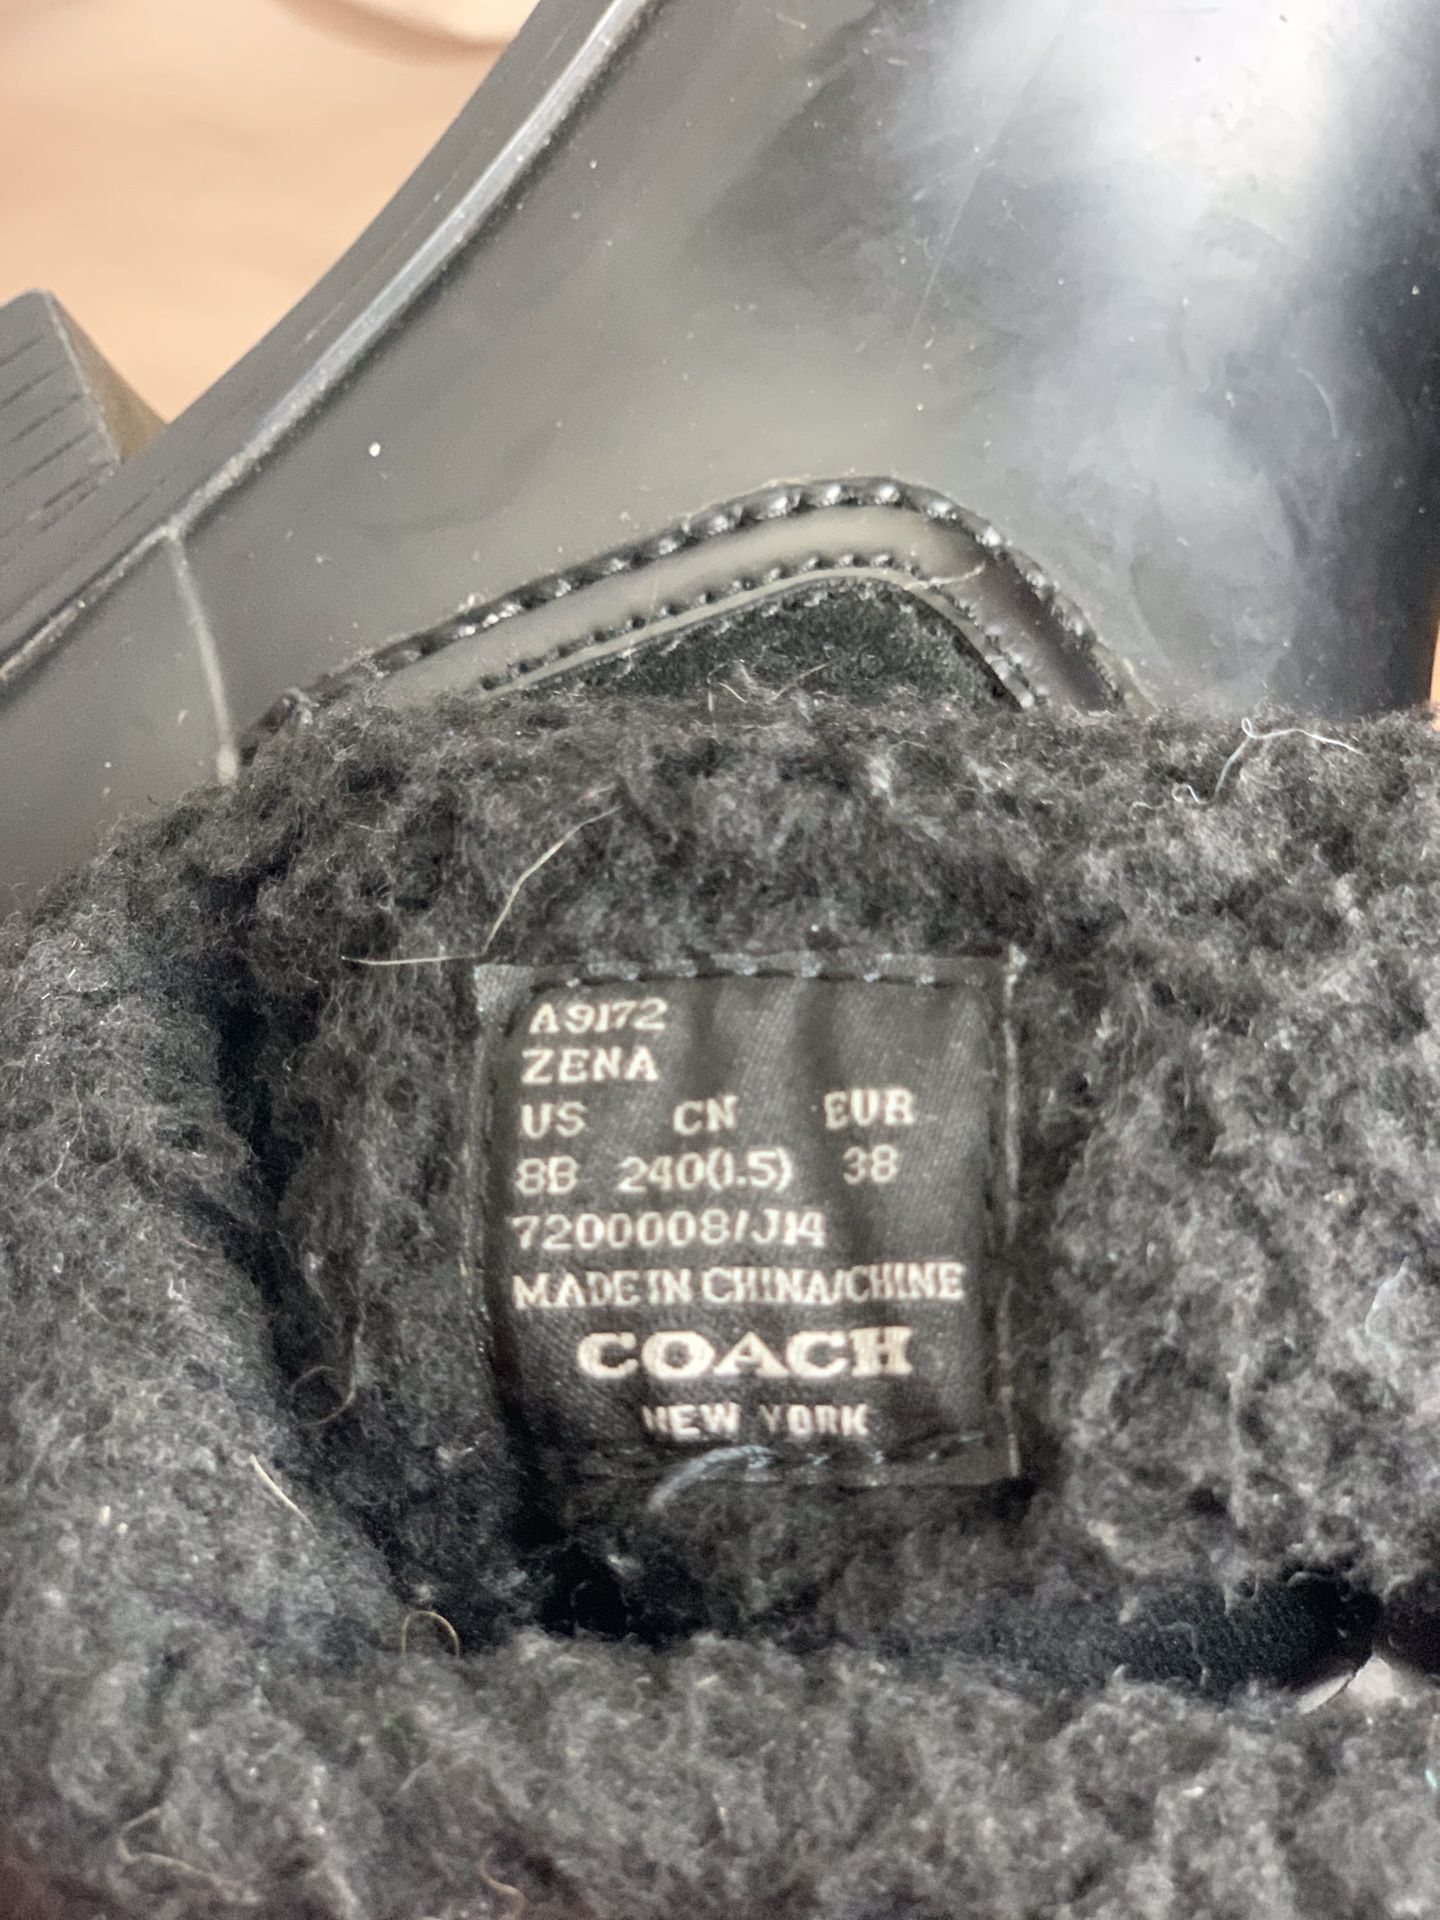 COACH Zena Leather Winter Boot Size 8B